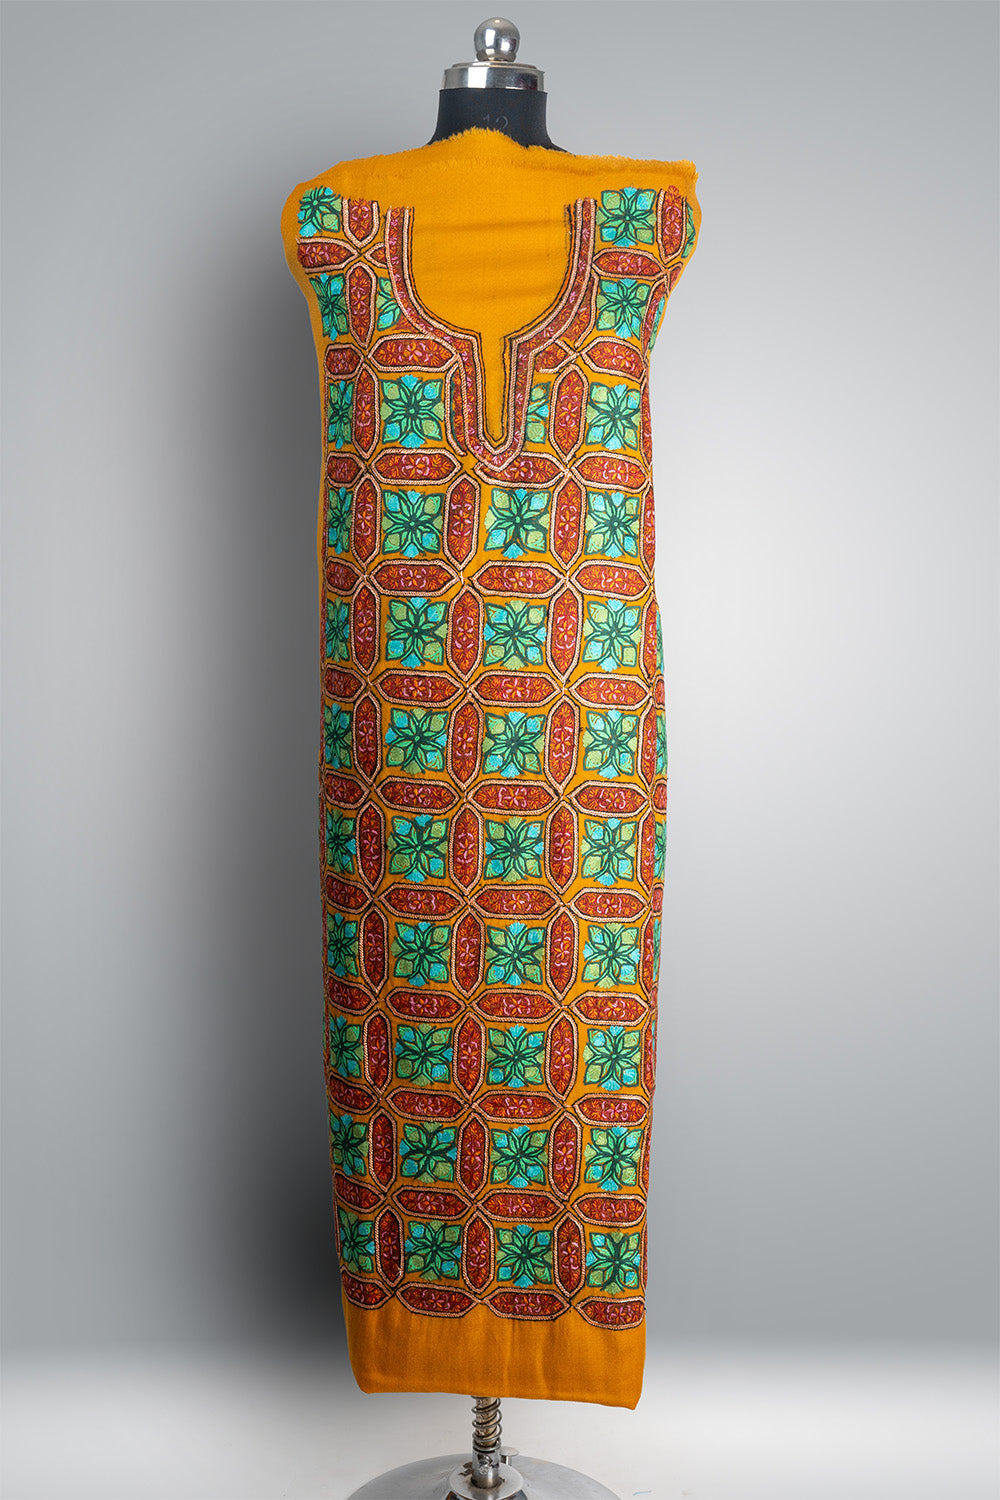 Sunehri-Tilla Sozni: Kashmiri Hand Embroidered Goldenrod Suit with Sozni and Hand-Tilla Embroidery